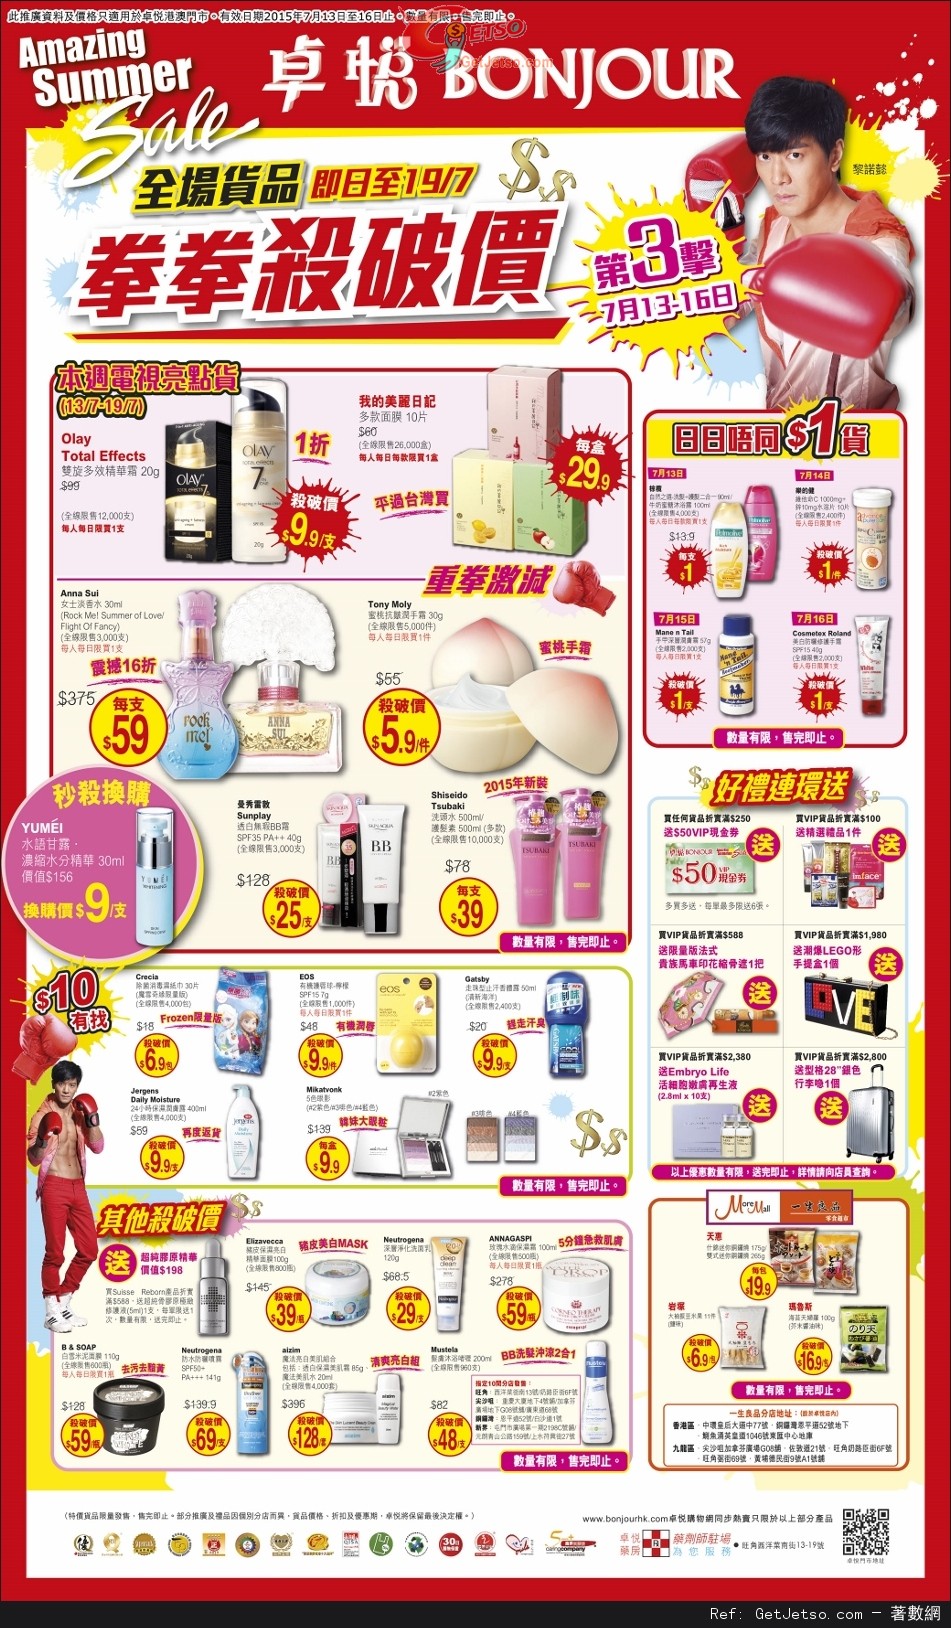 卓悅Amazing Summer Sale 第三擊購物優惠(至15年7月16日)圖片1